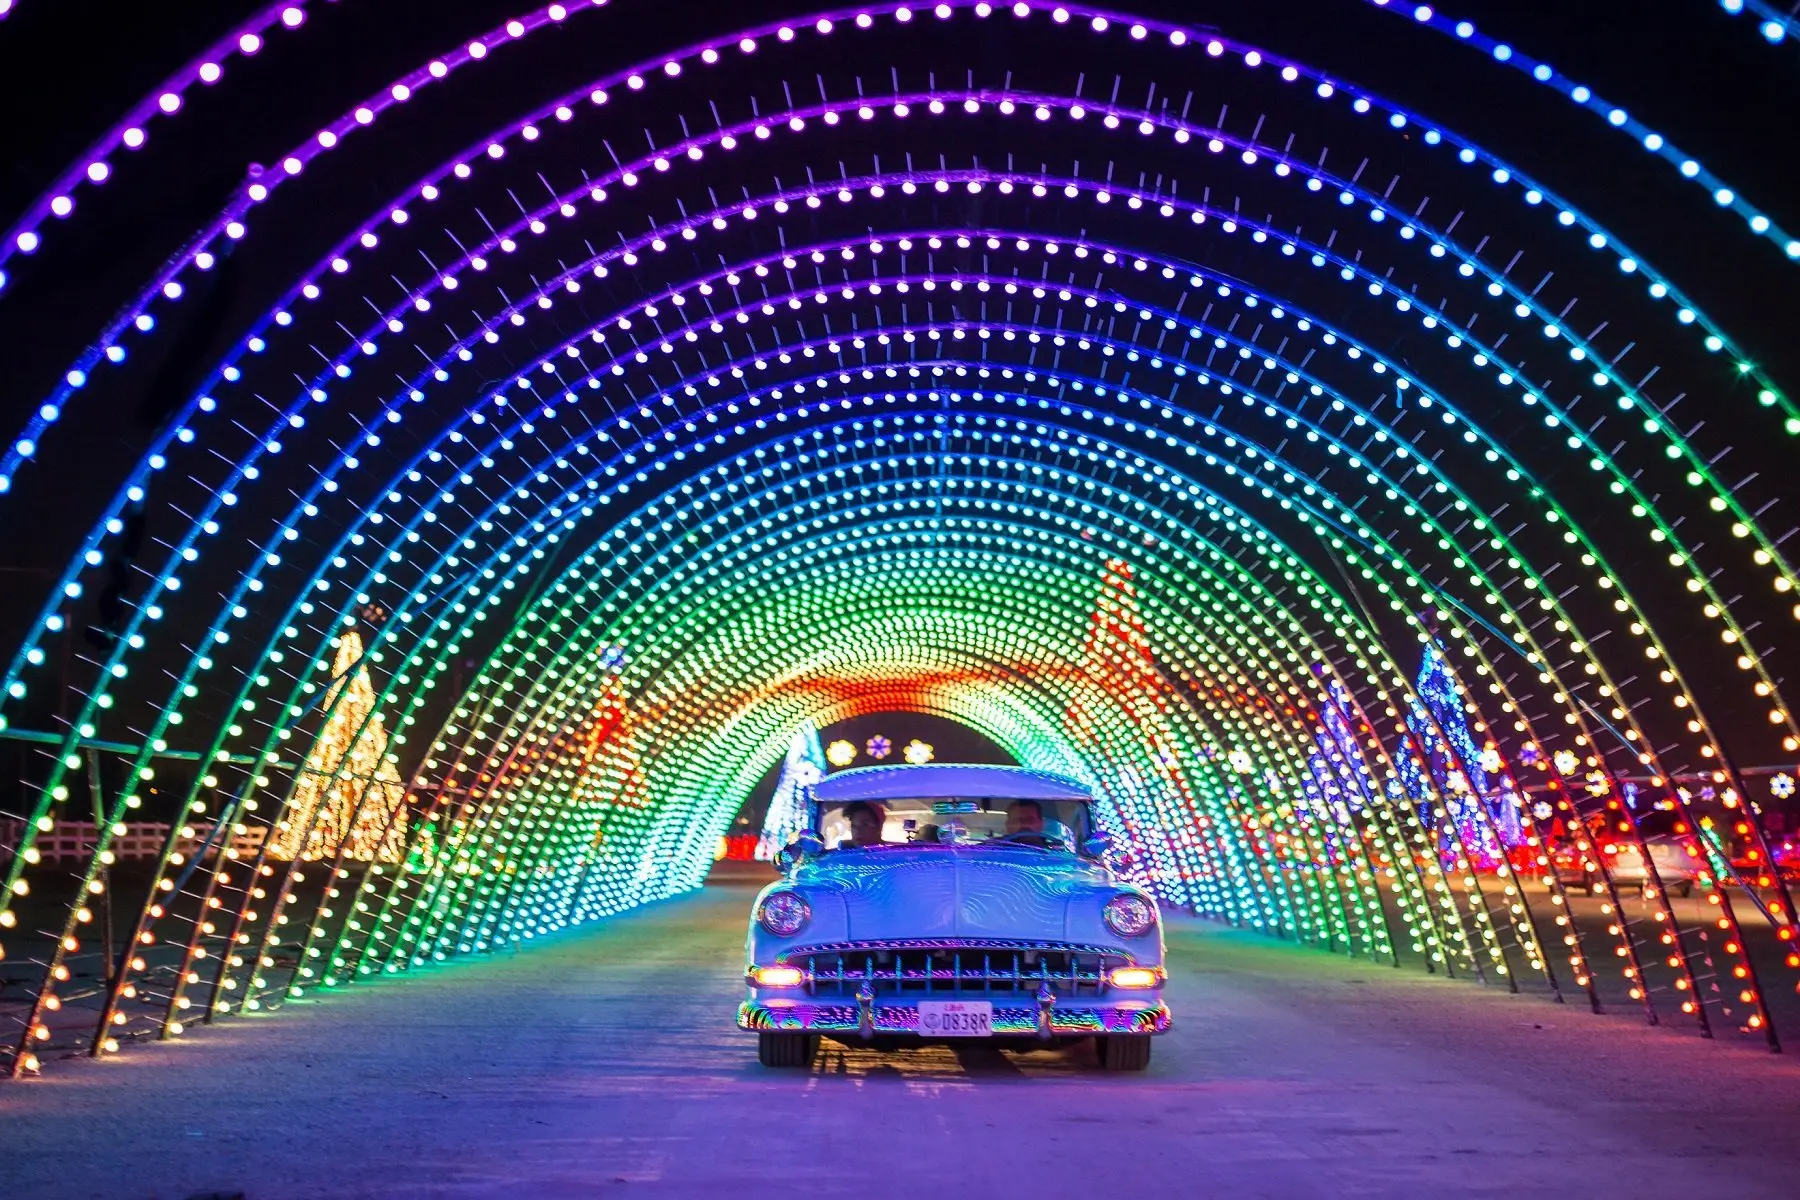 Car driving under holiday light display